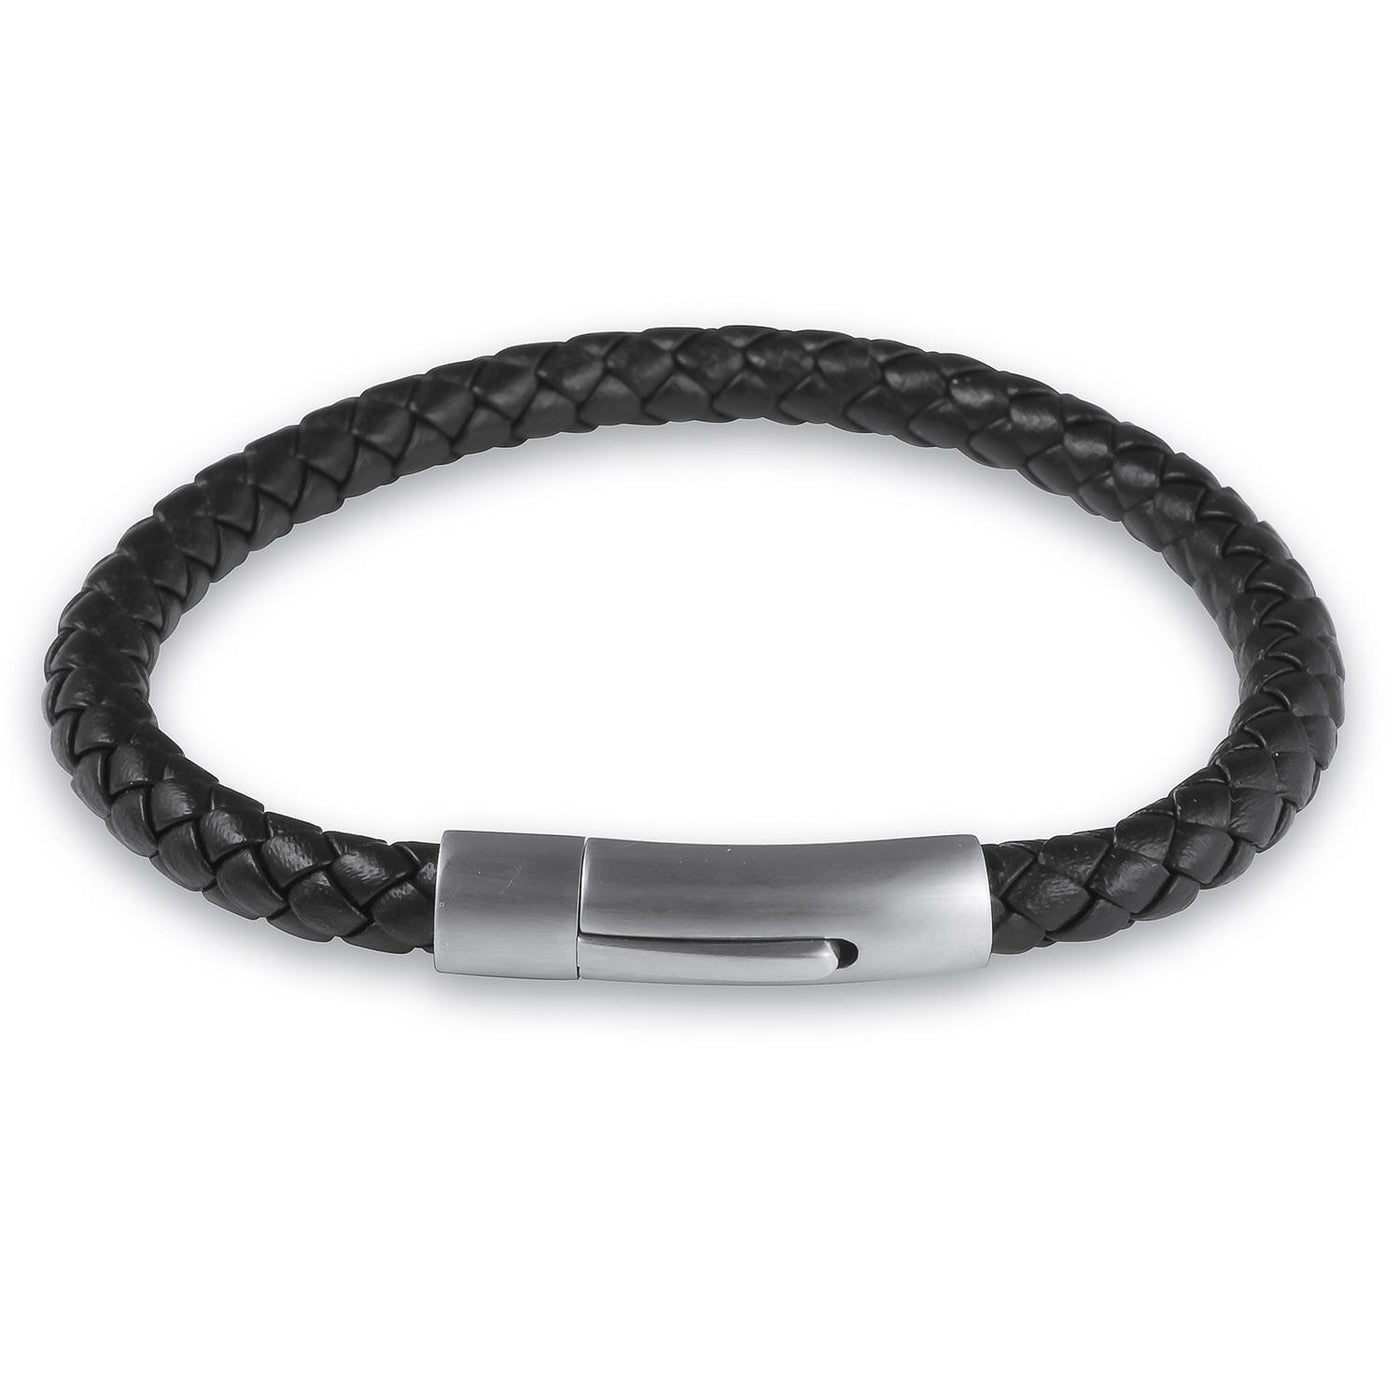 6mm Mens Black Leather Stainless Steel Bangle Bracelet With Matt Clip